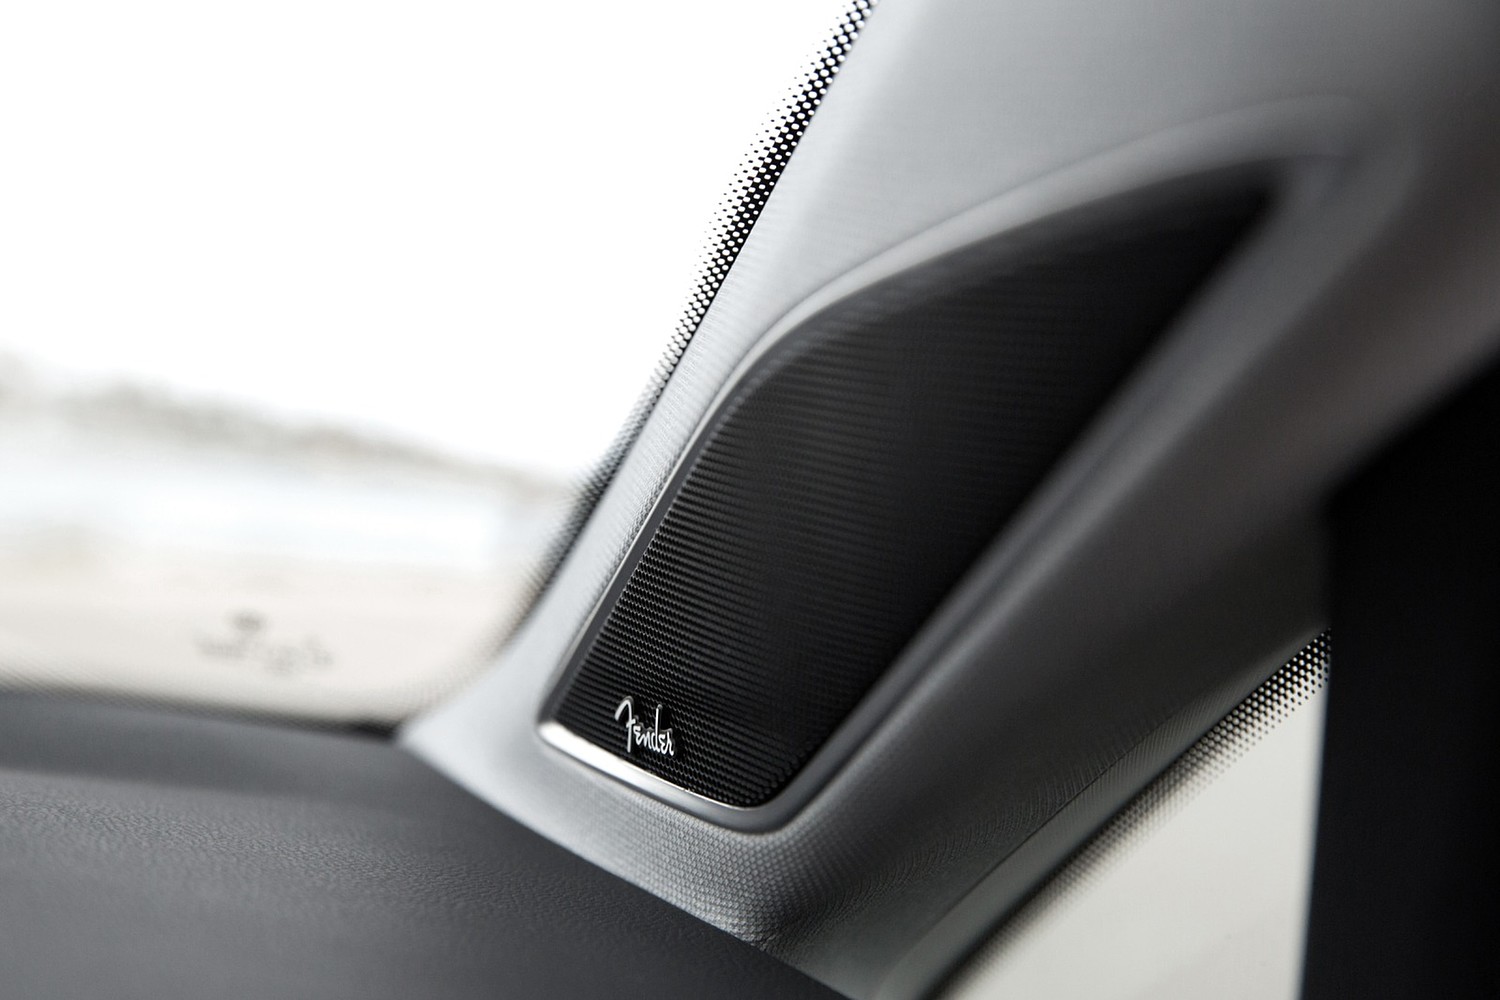 Volkswagen Golf SportWagen TSI SEL Wagon Premium Audio System (2015 model year shown)